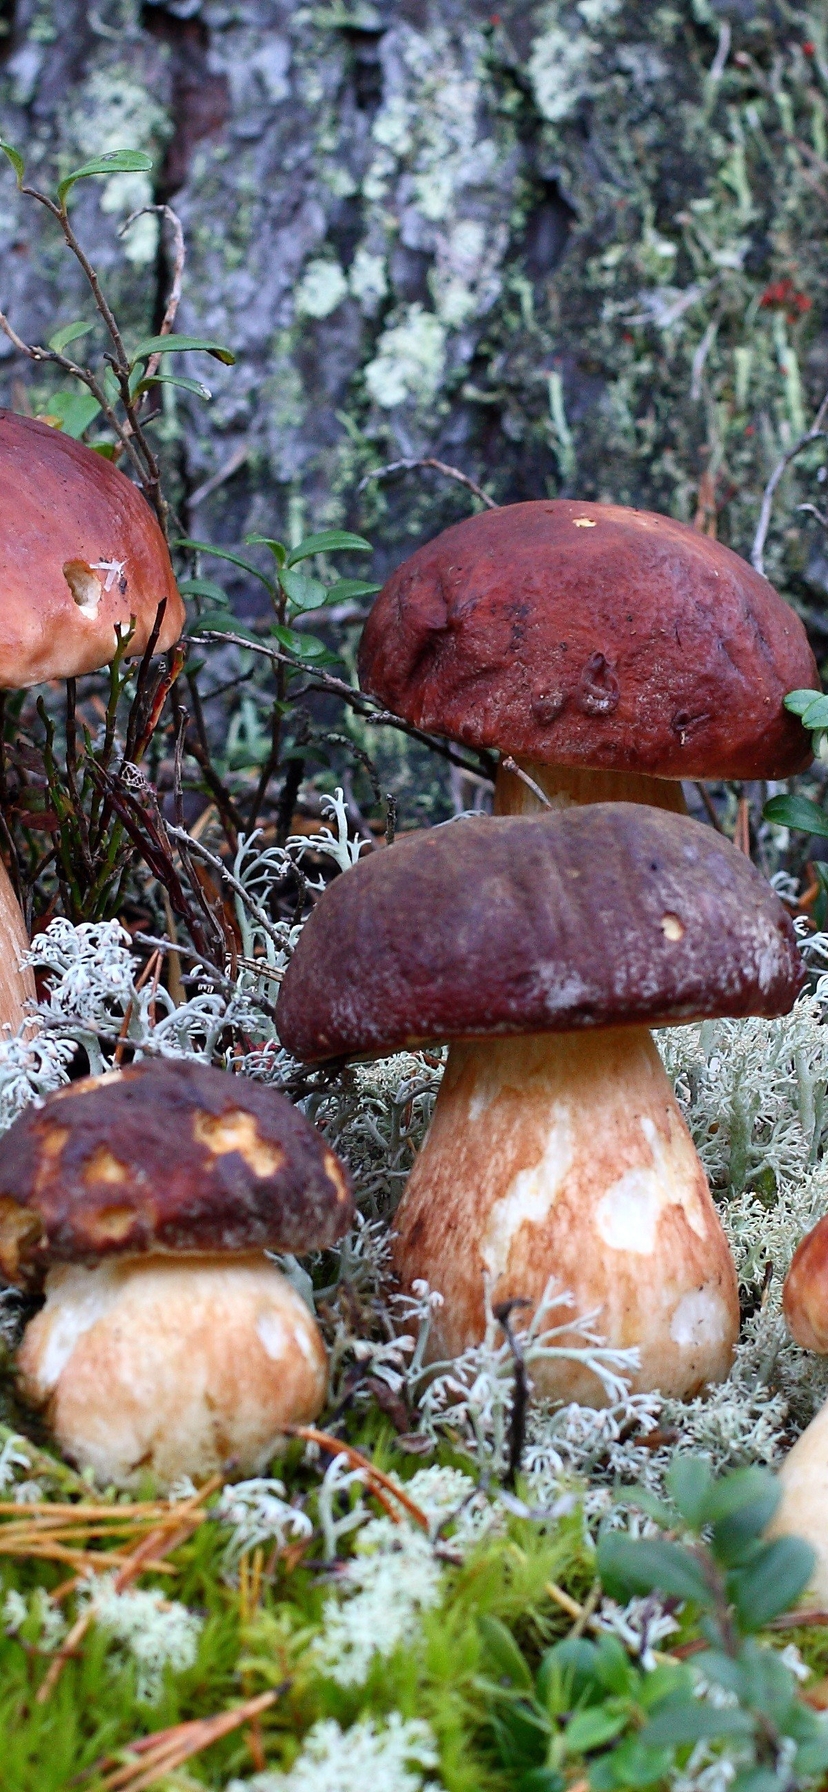 Image: Mushrooms, white fungus, boletus, nature, forest, moss, family